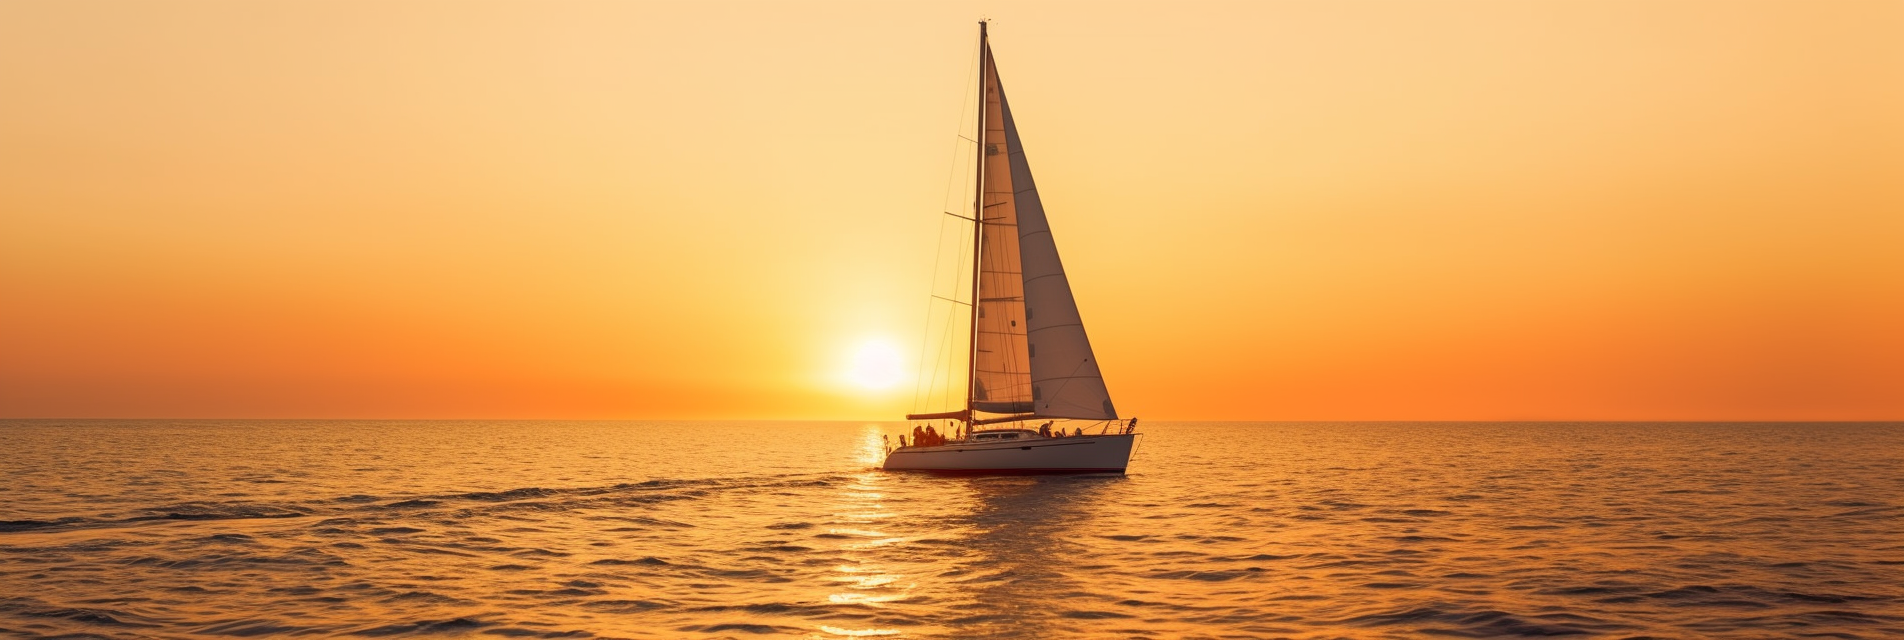 Diegoanaya a yacht sailing into the sunset evoking the idea of  3f170255 61a4 4ea0 9717 19148236866b